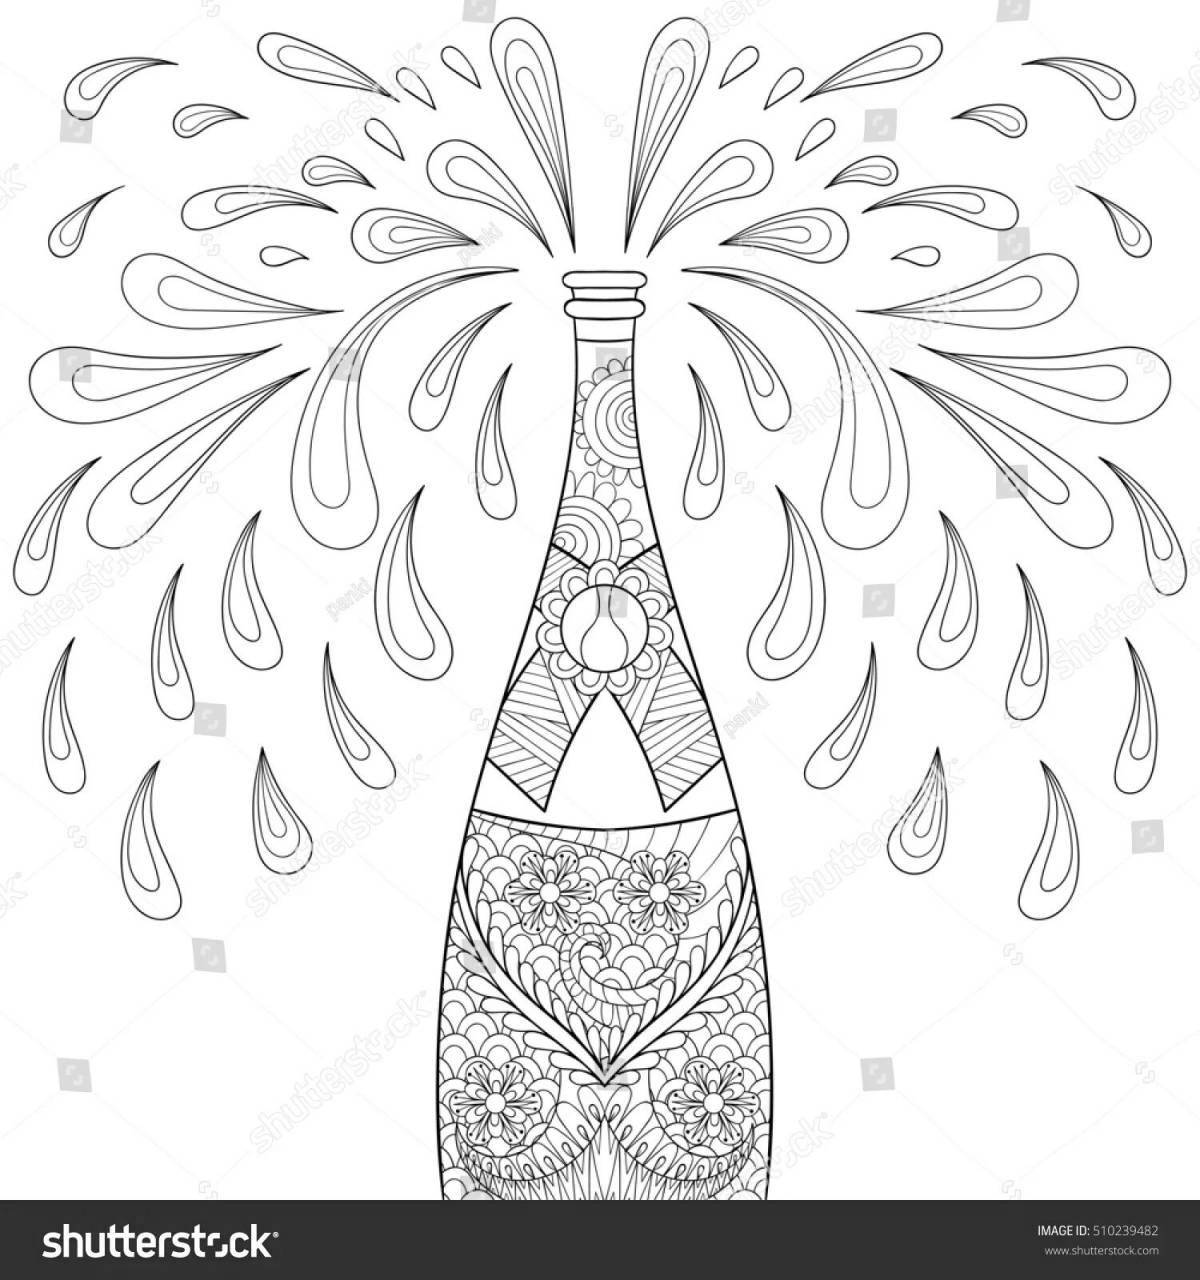 Joyful coloring champagne bottle